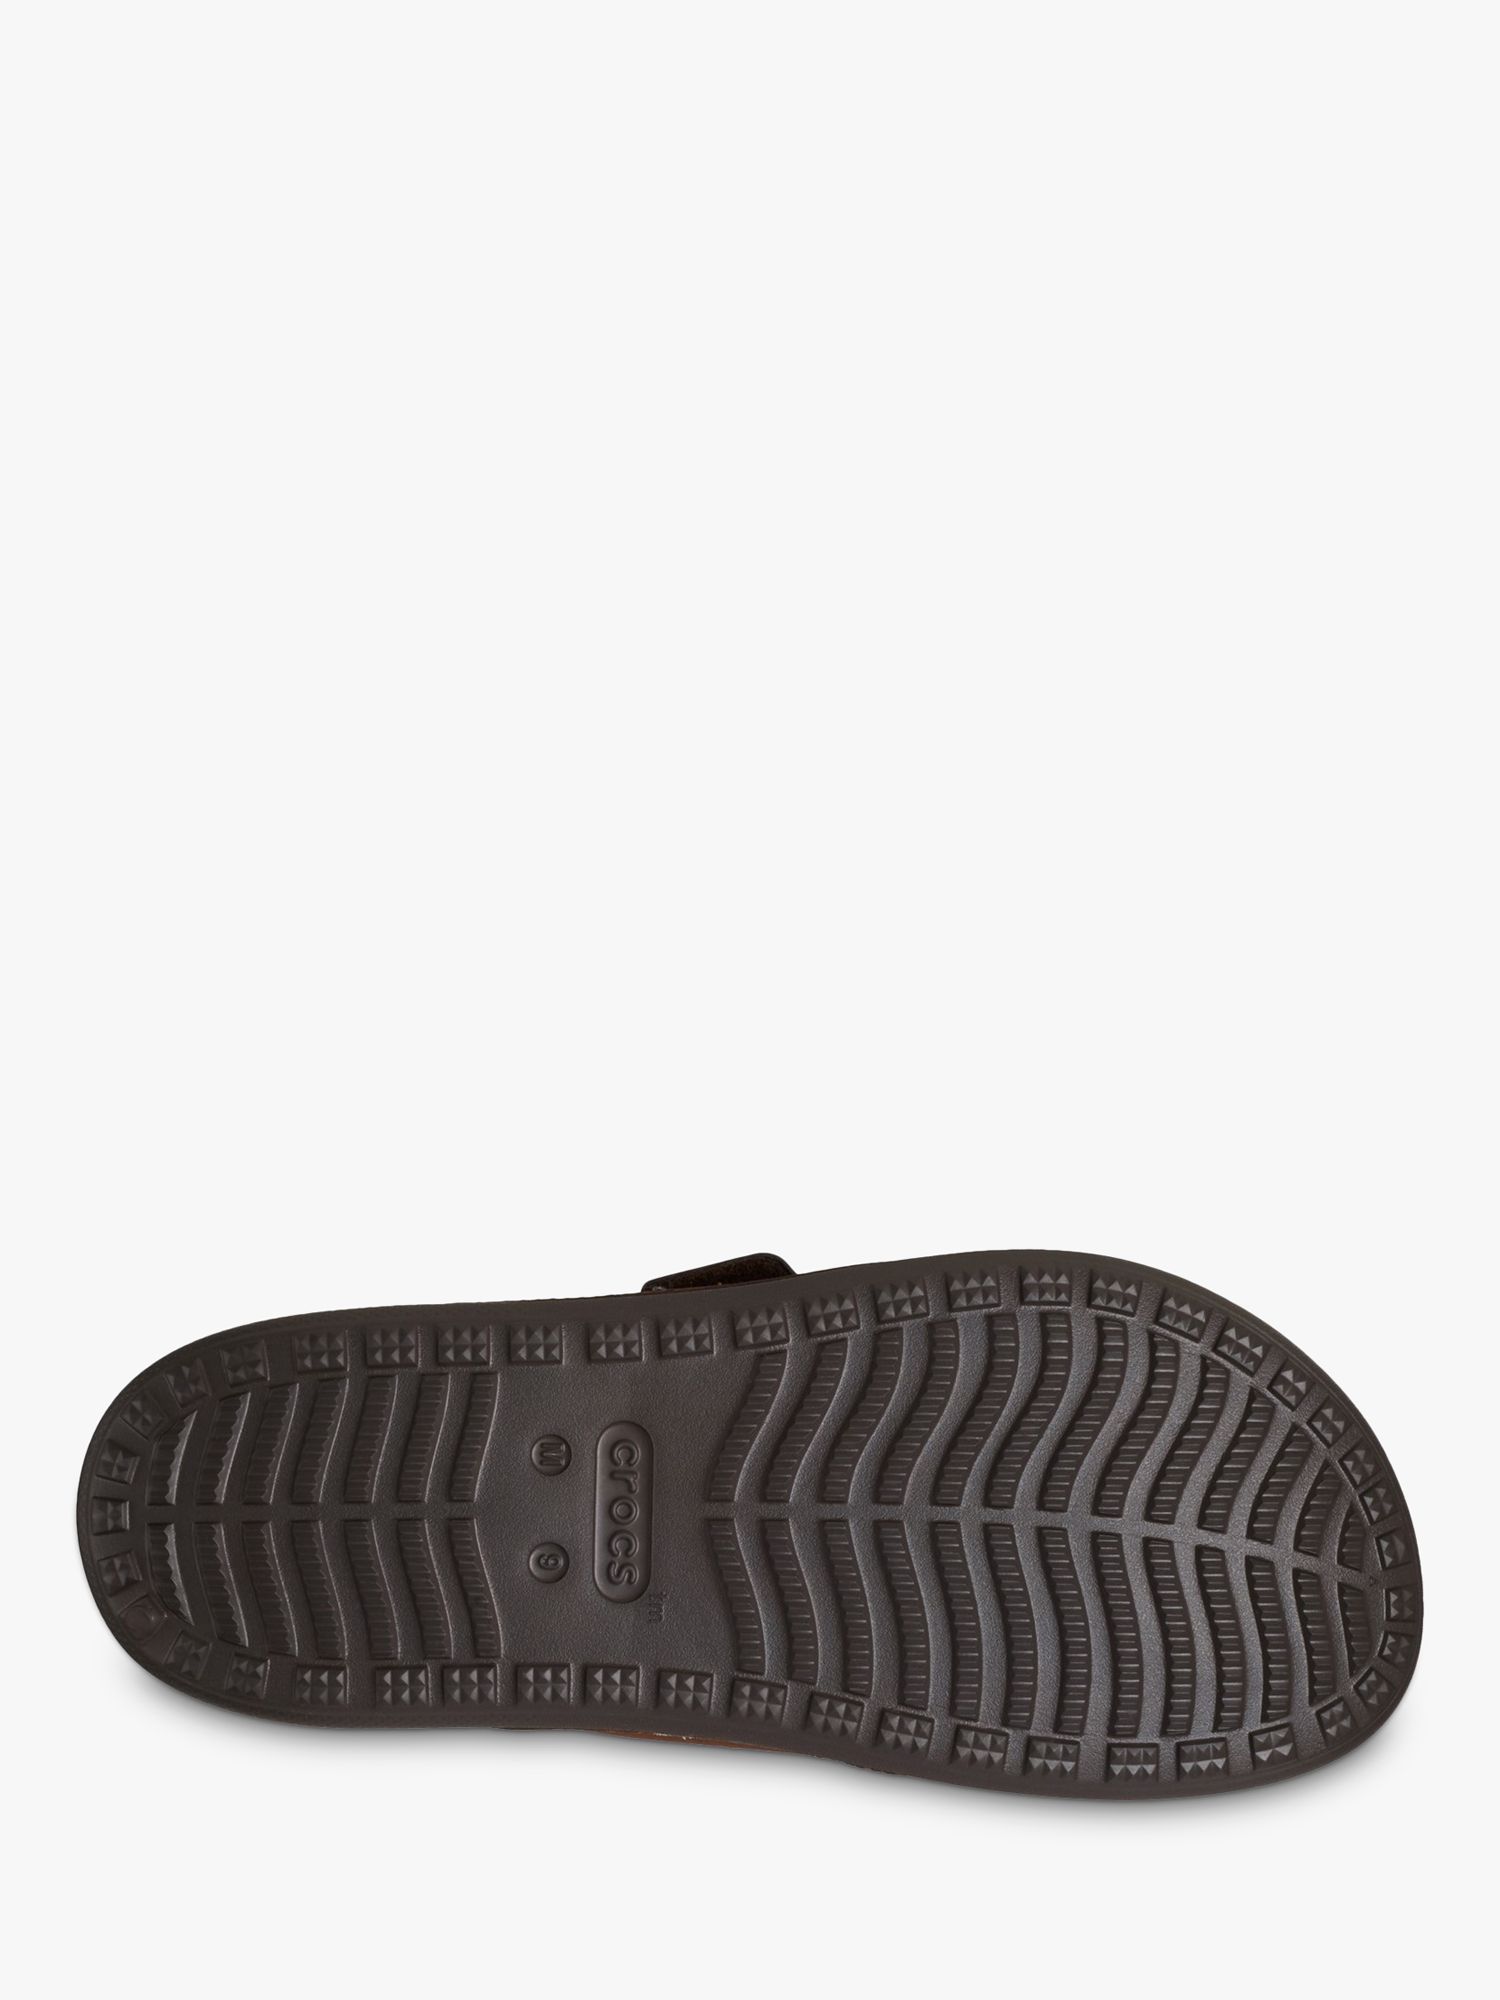 Crocs Yukon Vista II Sandals, Dark Brown, 12